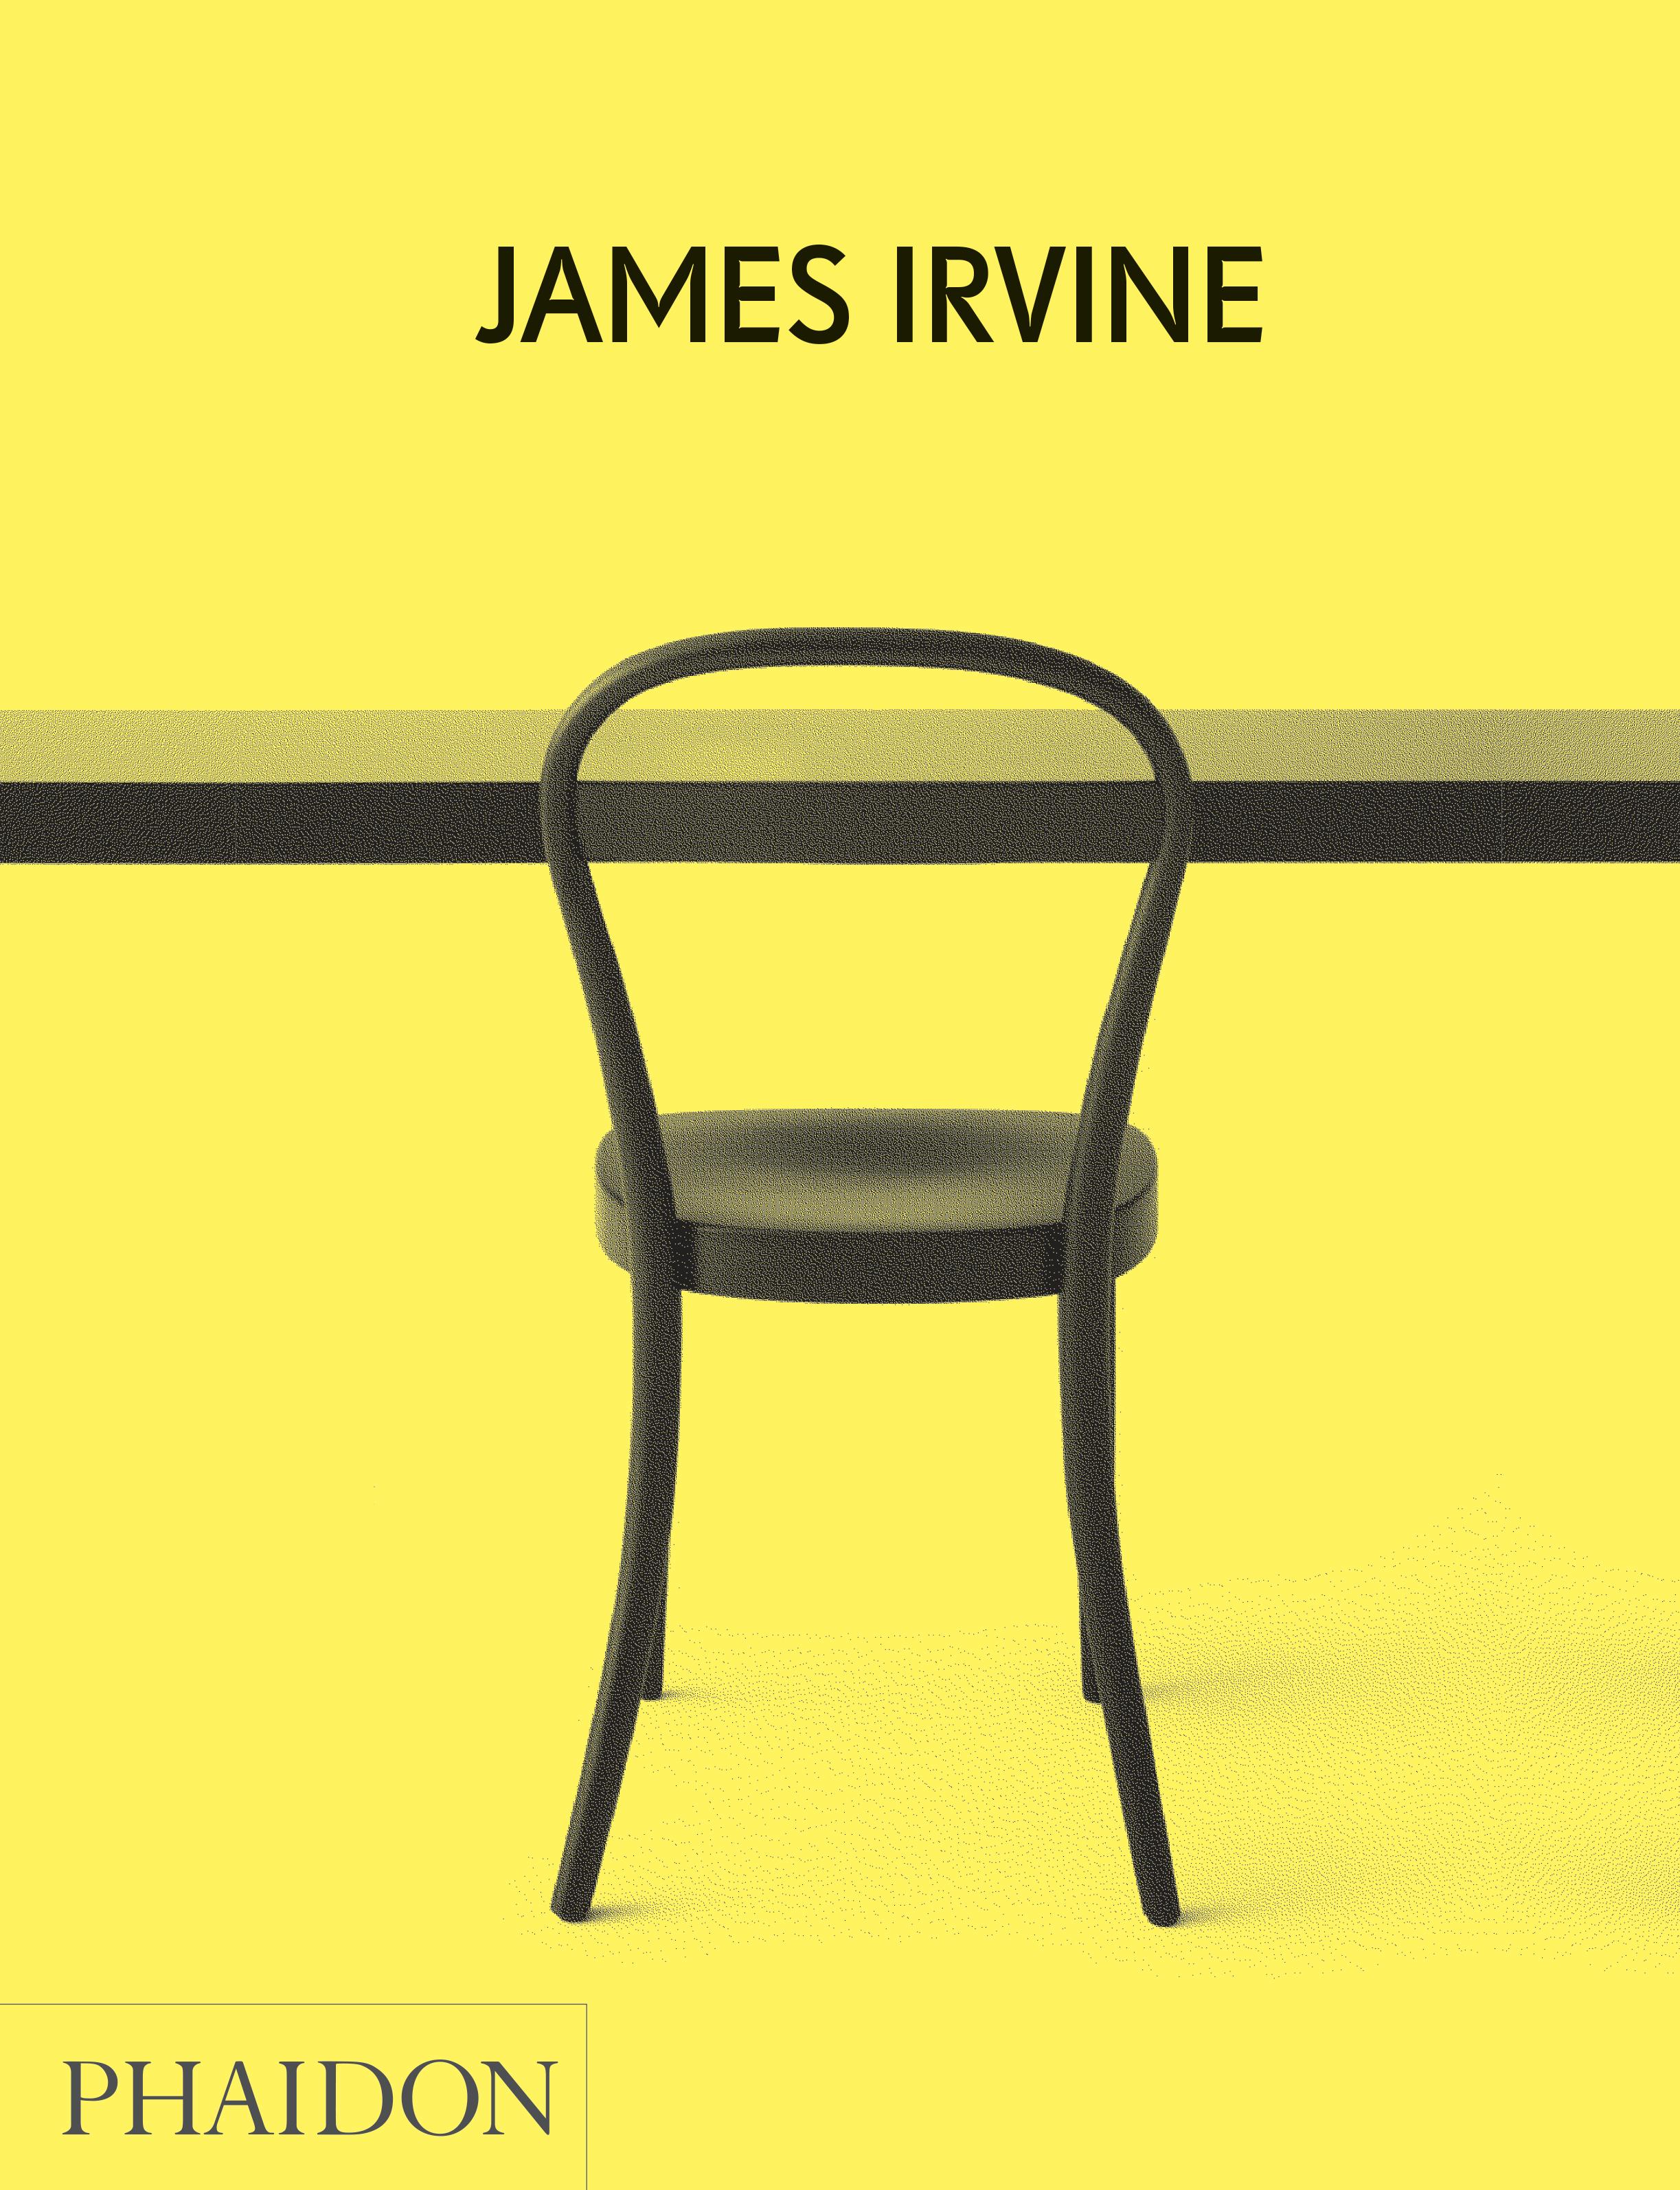 Livre de James Irvine en vente 2